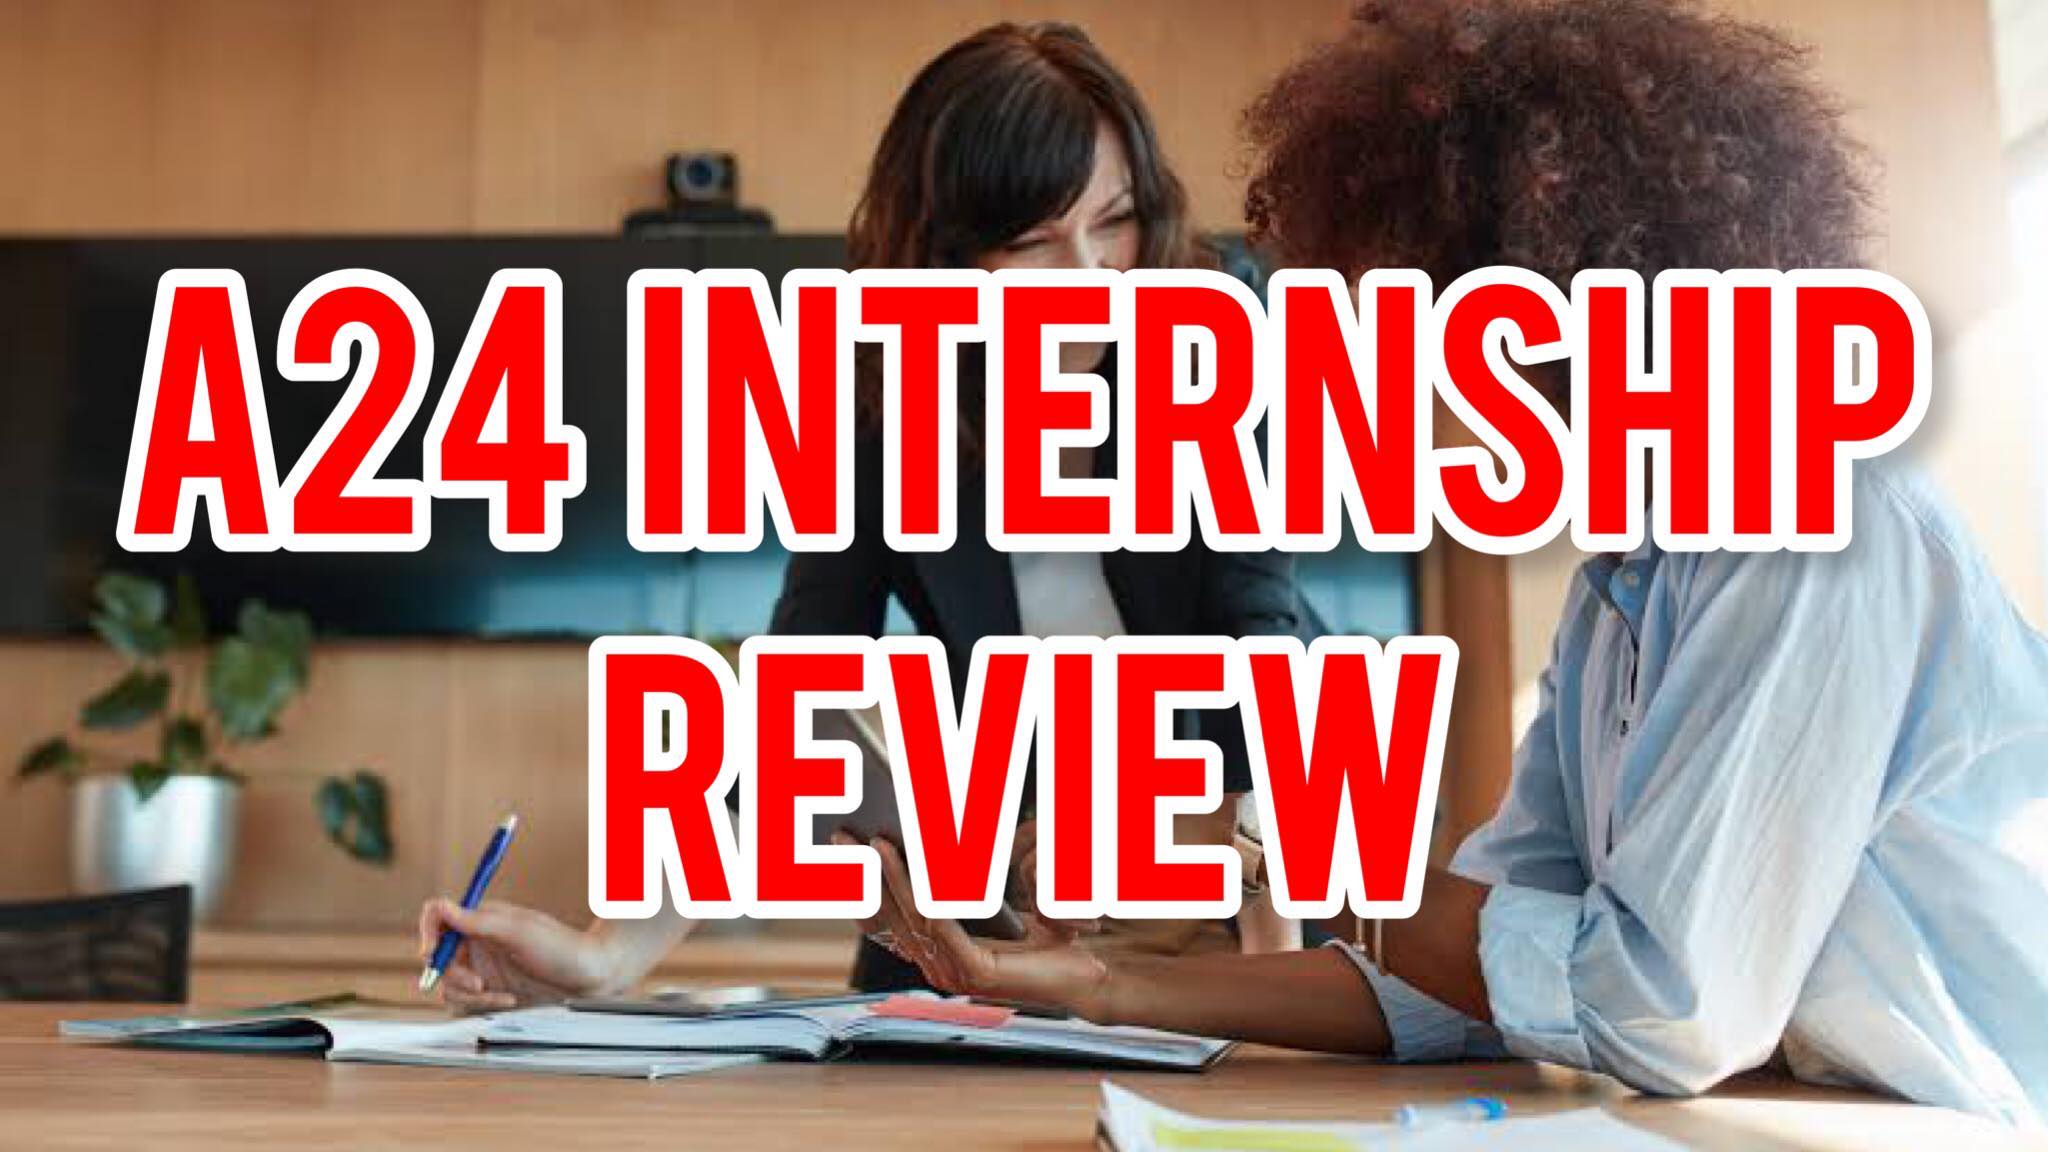 A24 Internship Program Review